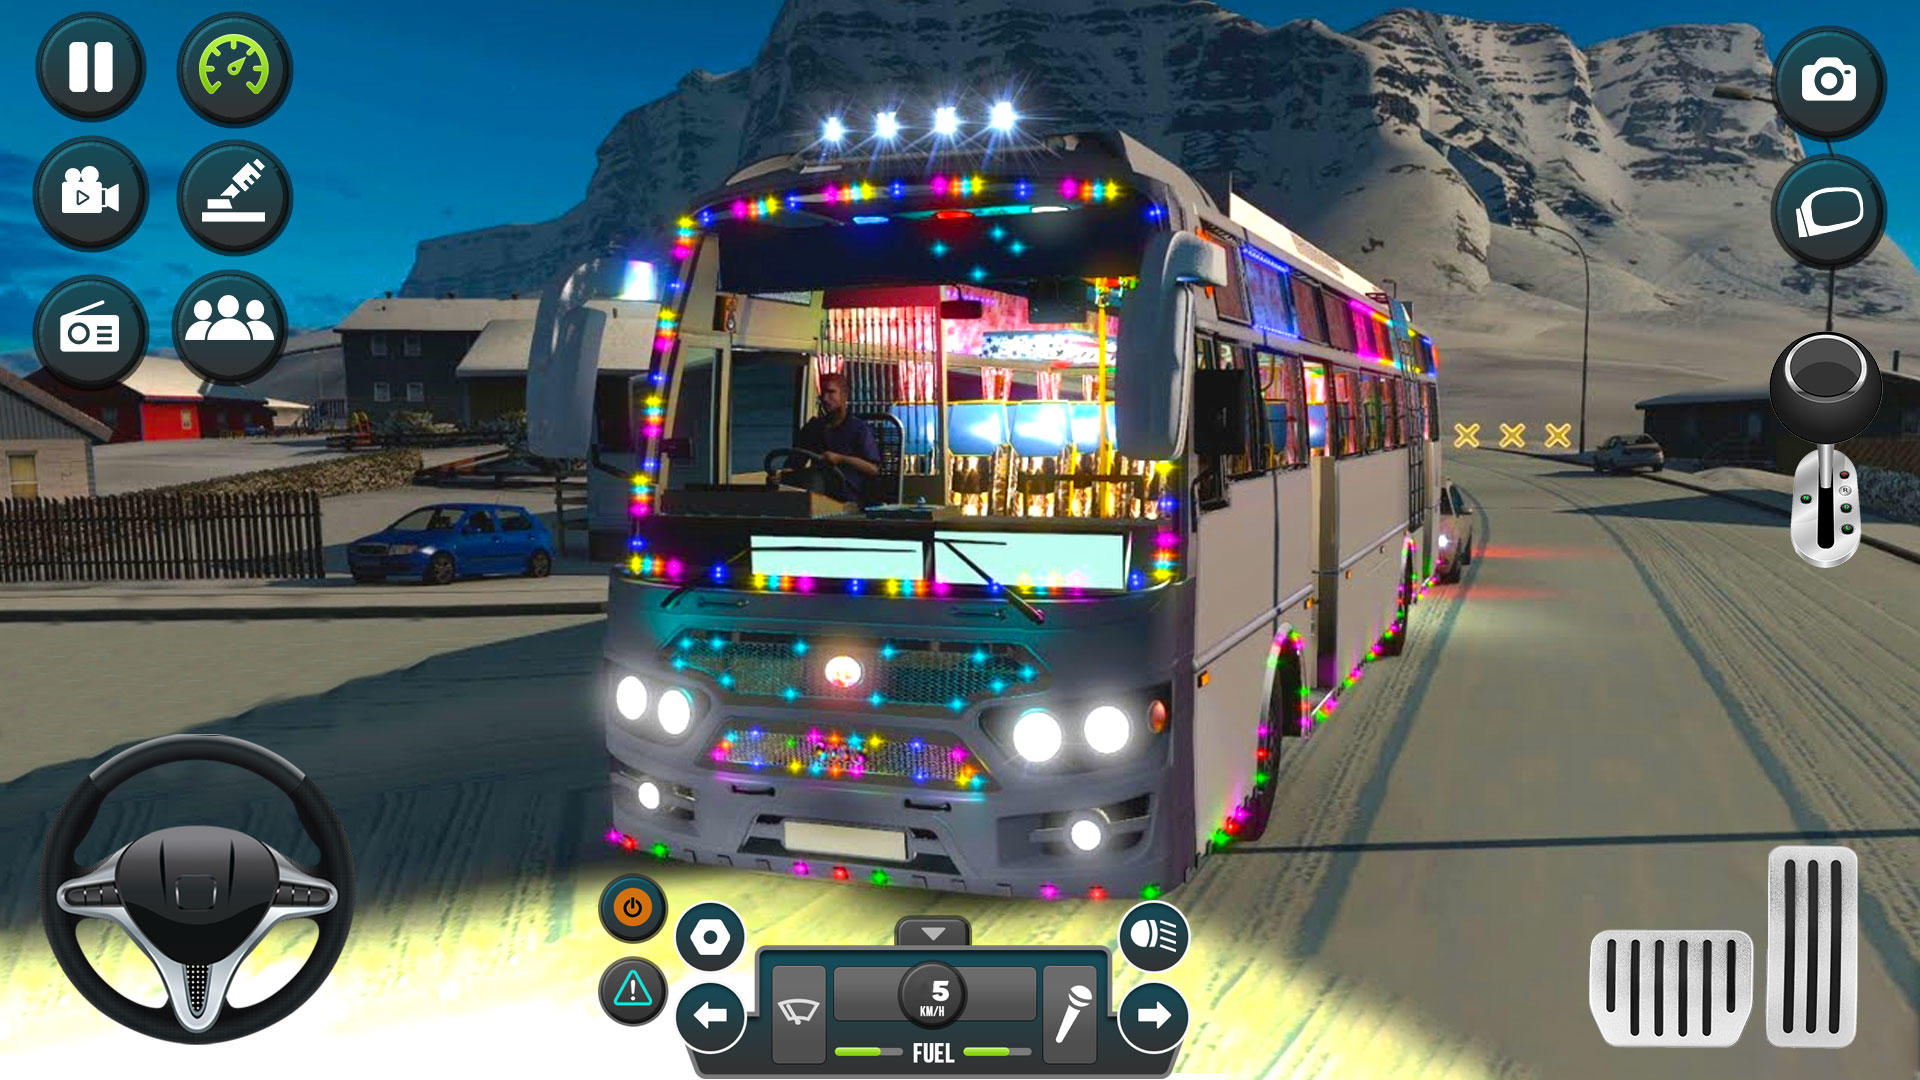 Screenshot 1 of jeu bus euro entraîneur 3d sim 0.1